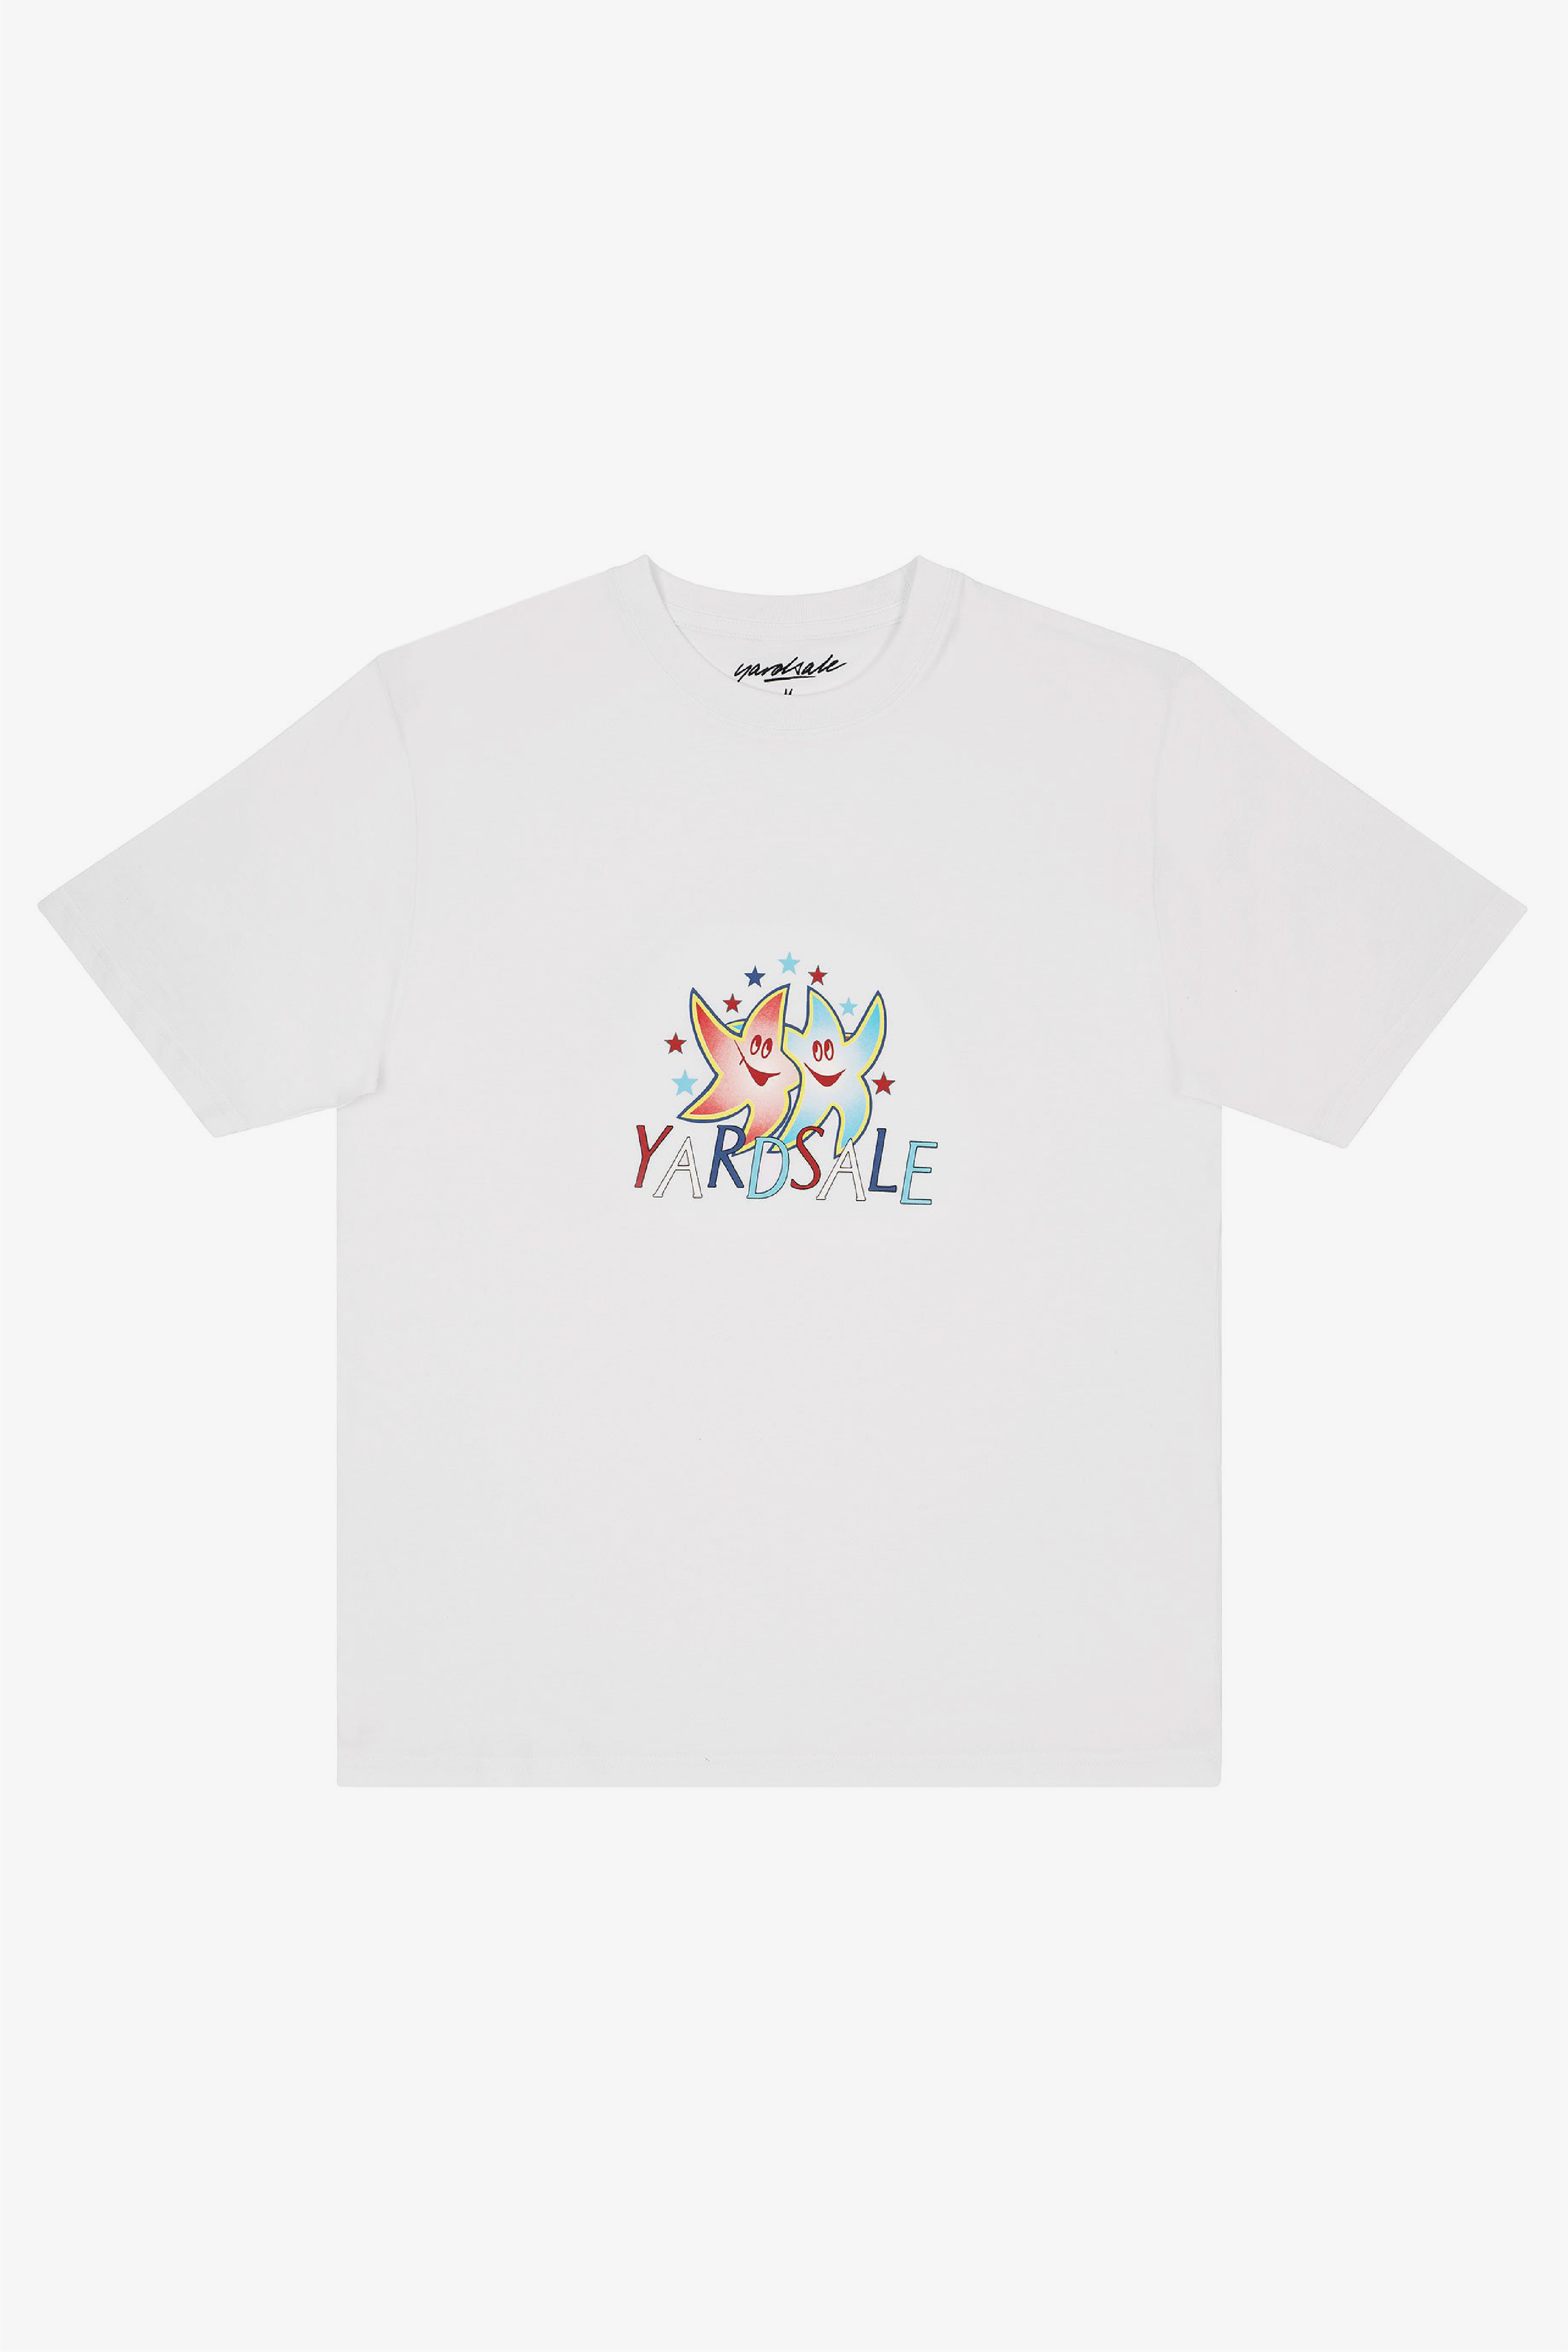 Selectshop FRAME - YARDSALE Beaming Tee T-Shirts Dubai